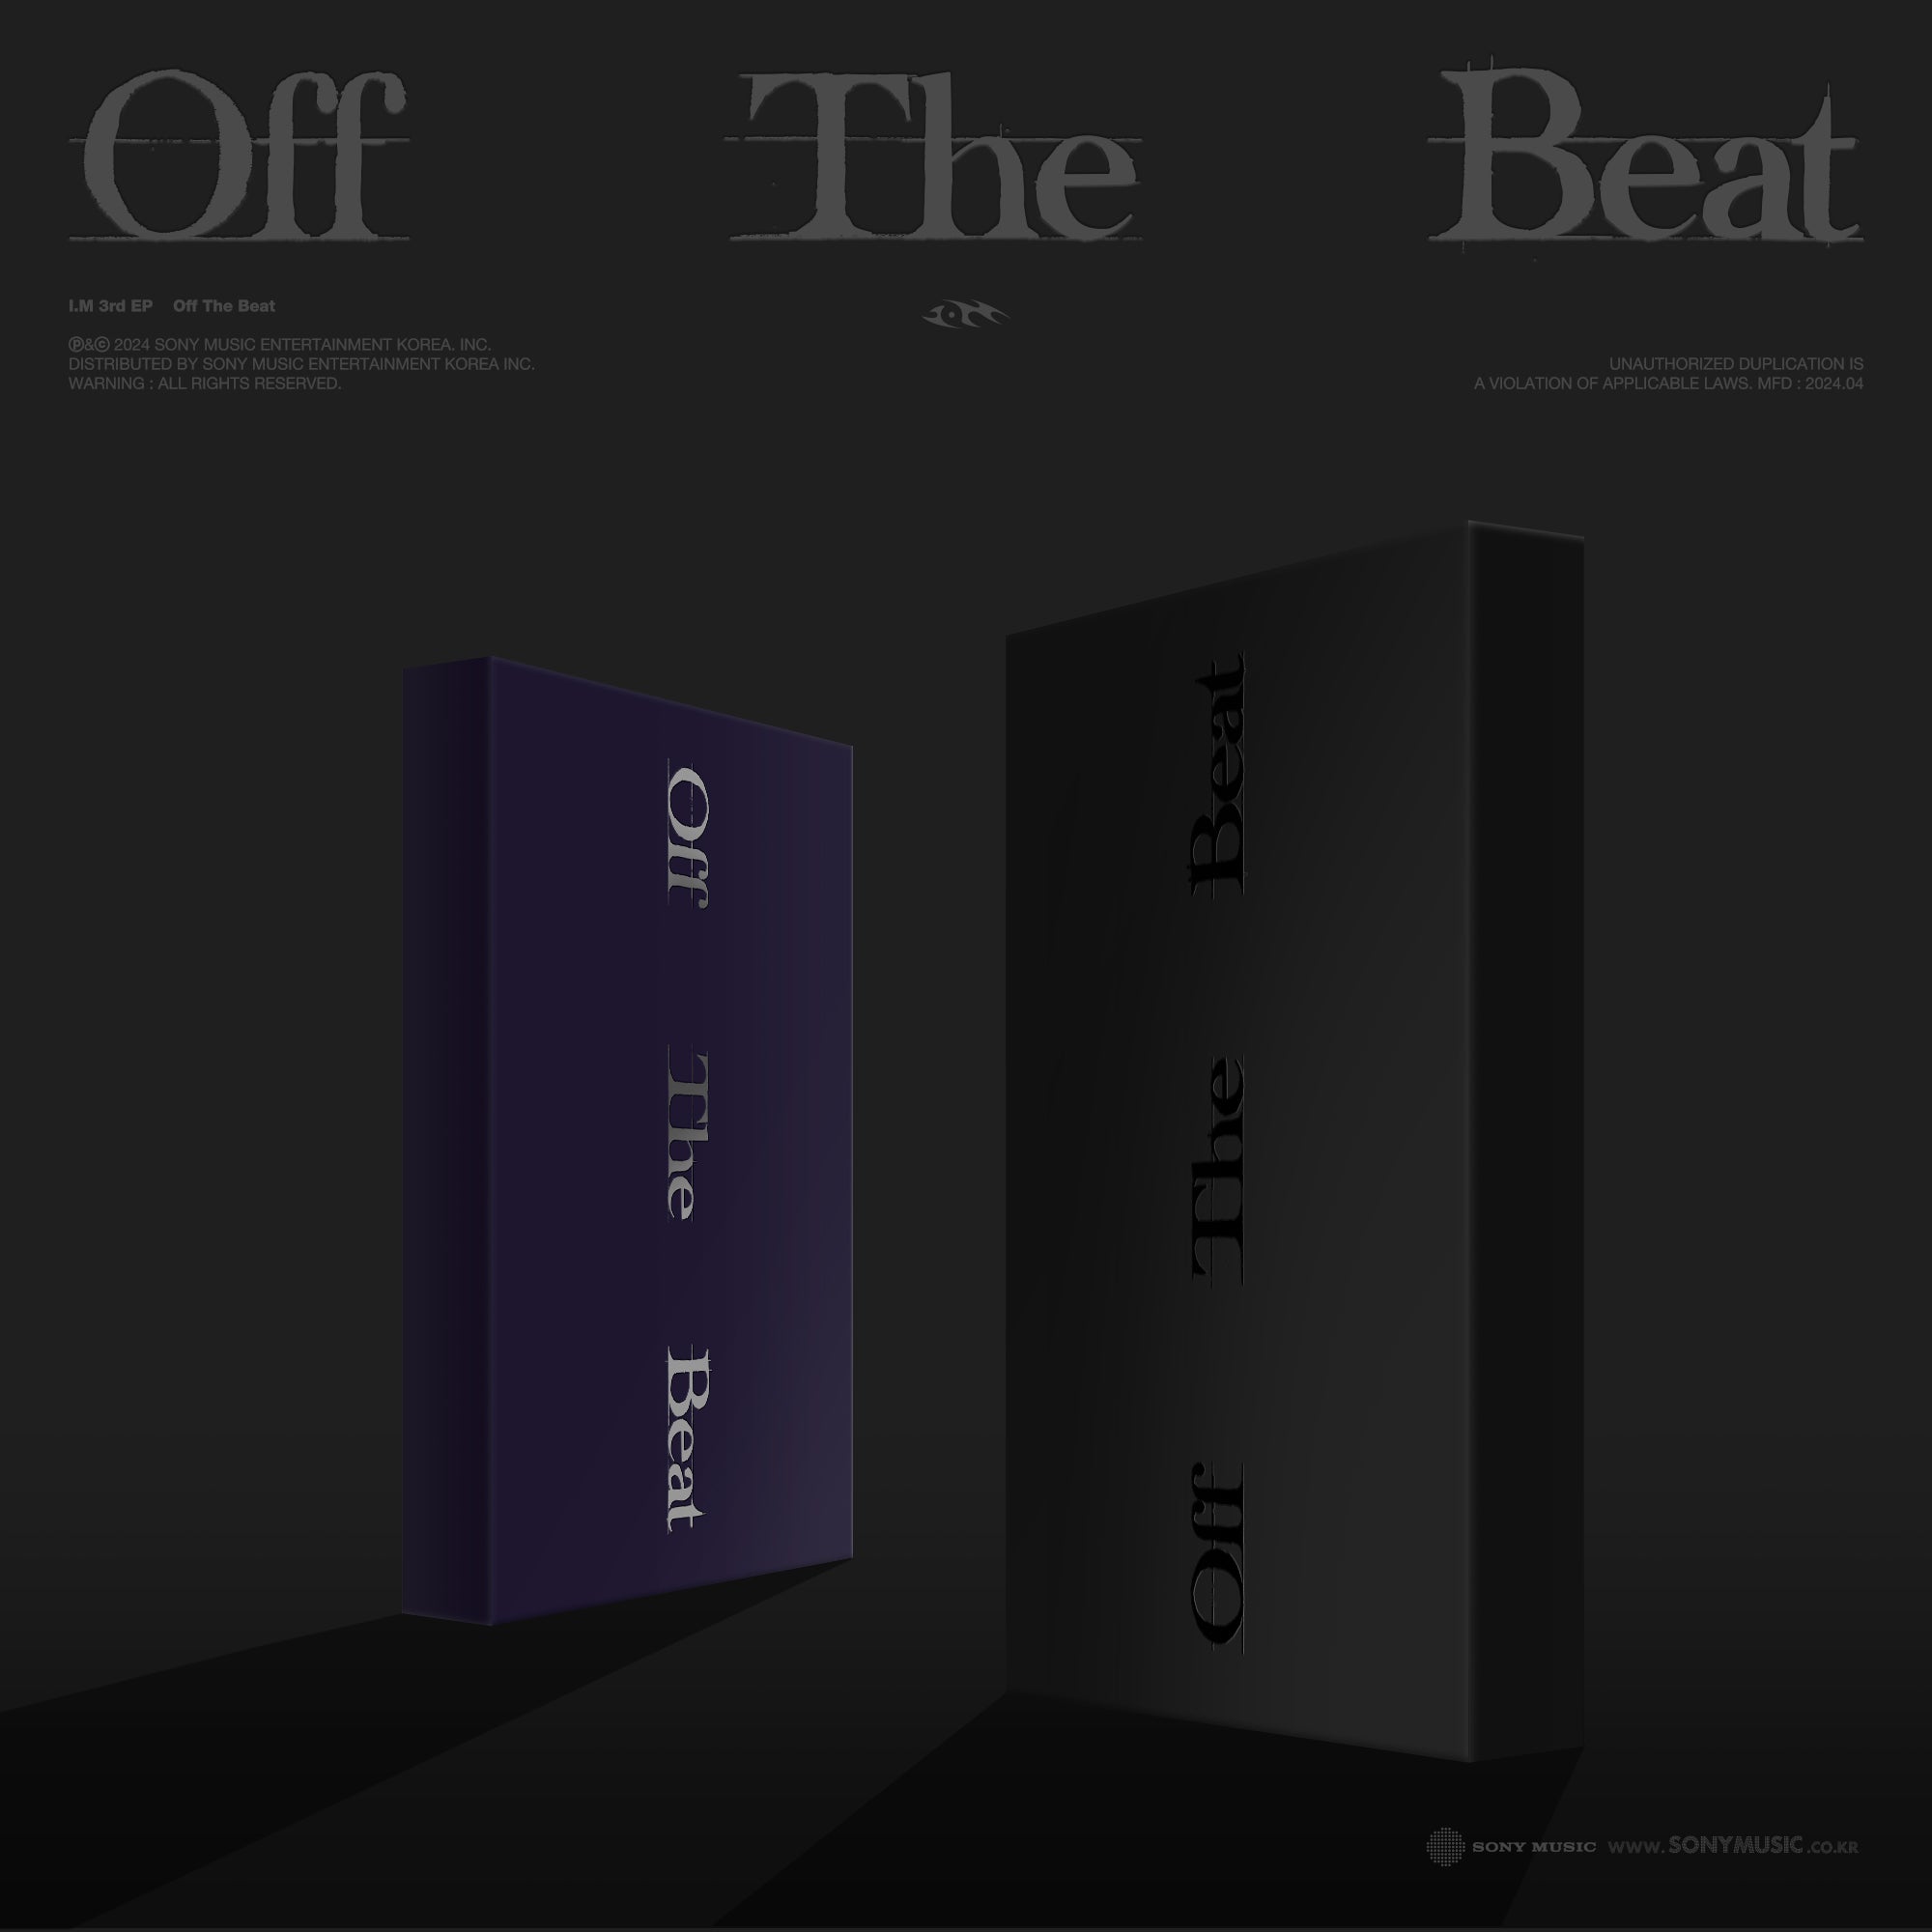 I.M - 3RD EP [Off The Beat] PHOTOBOOK Ver. - KPOPHERO